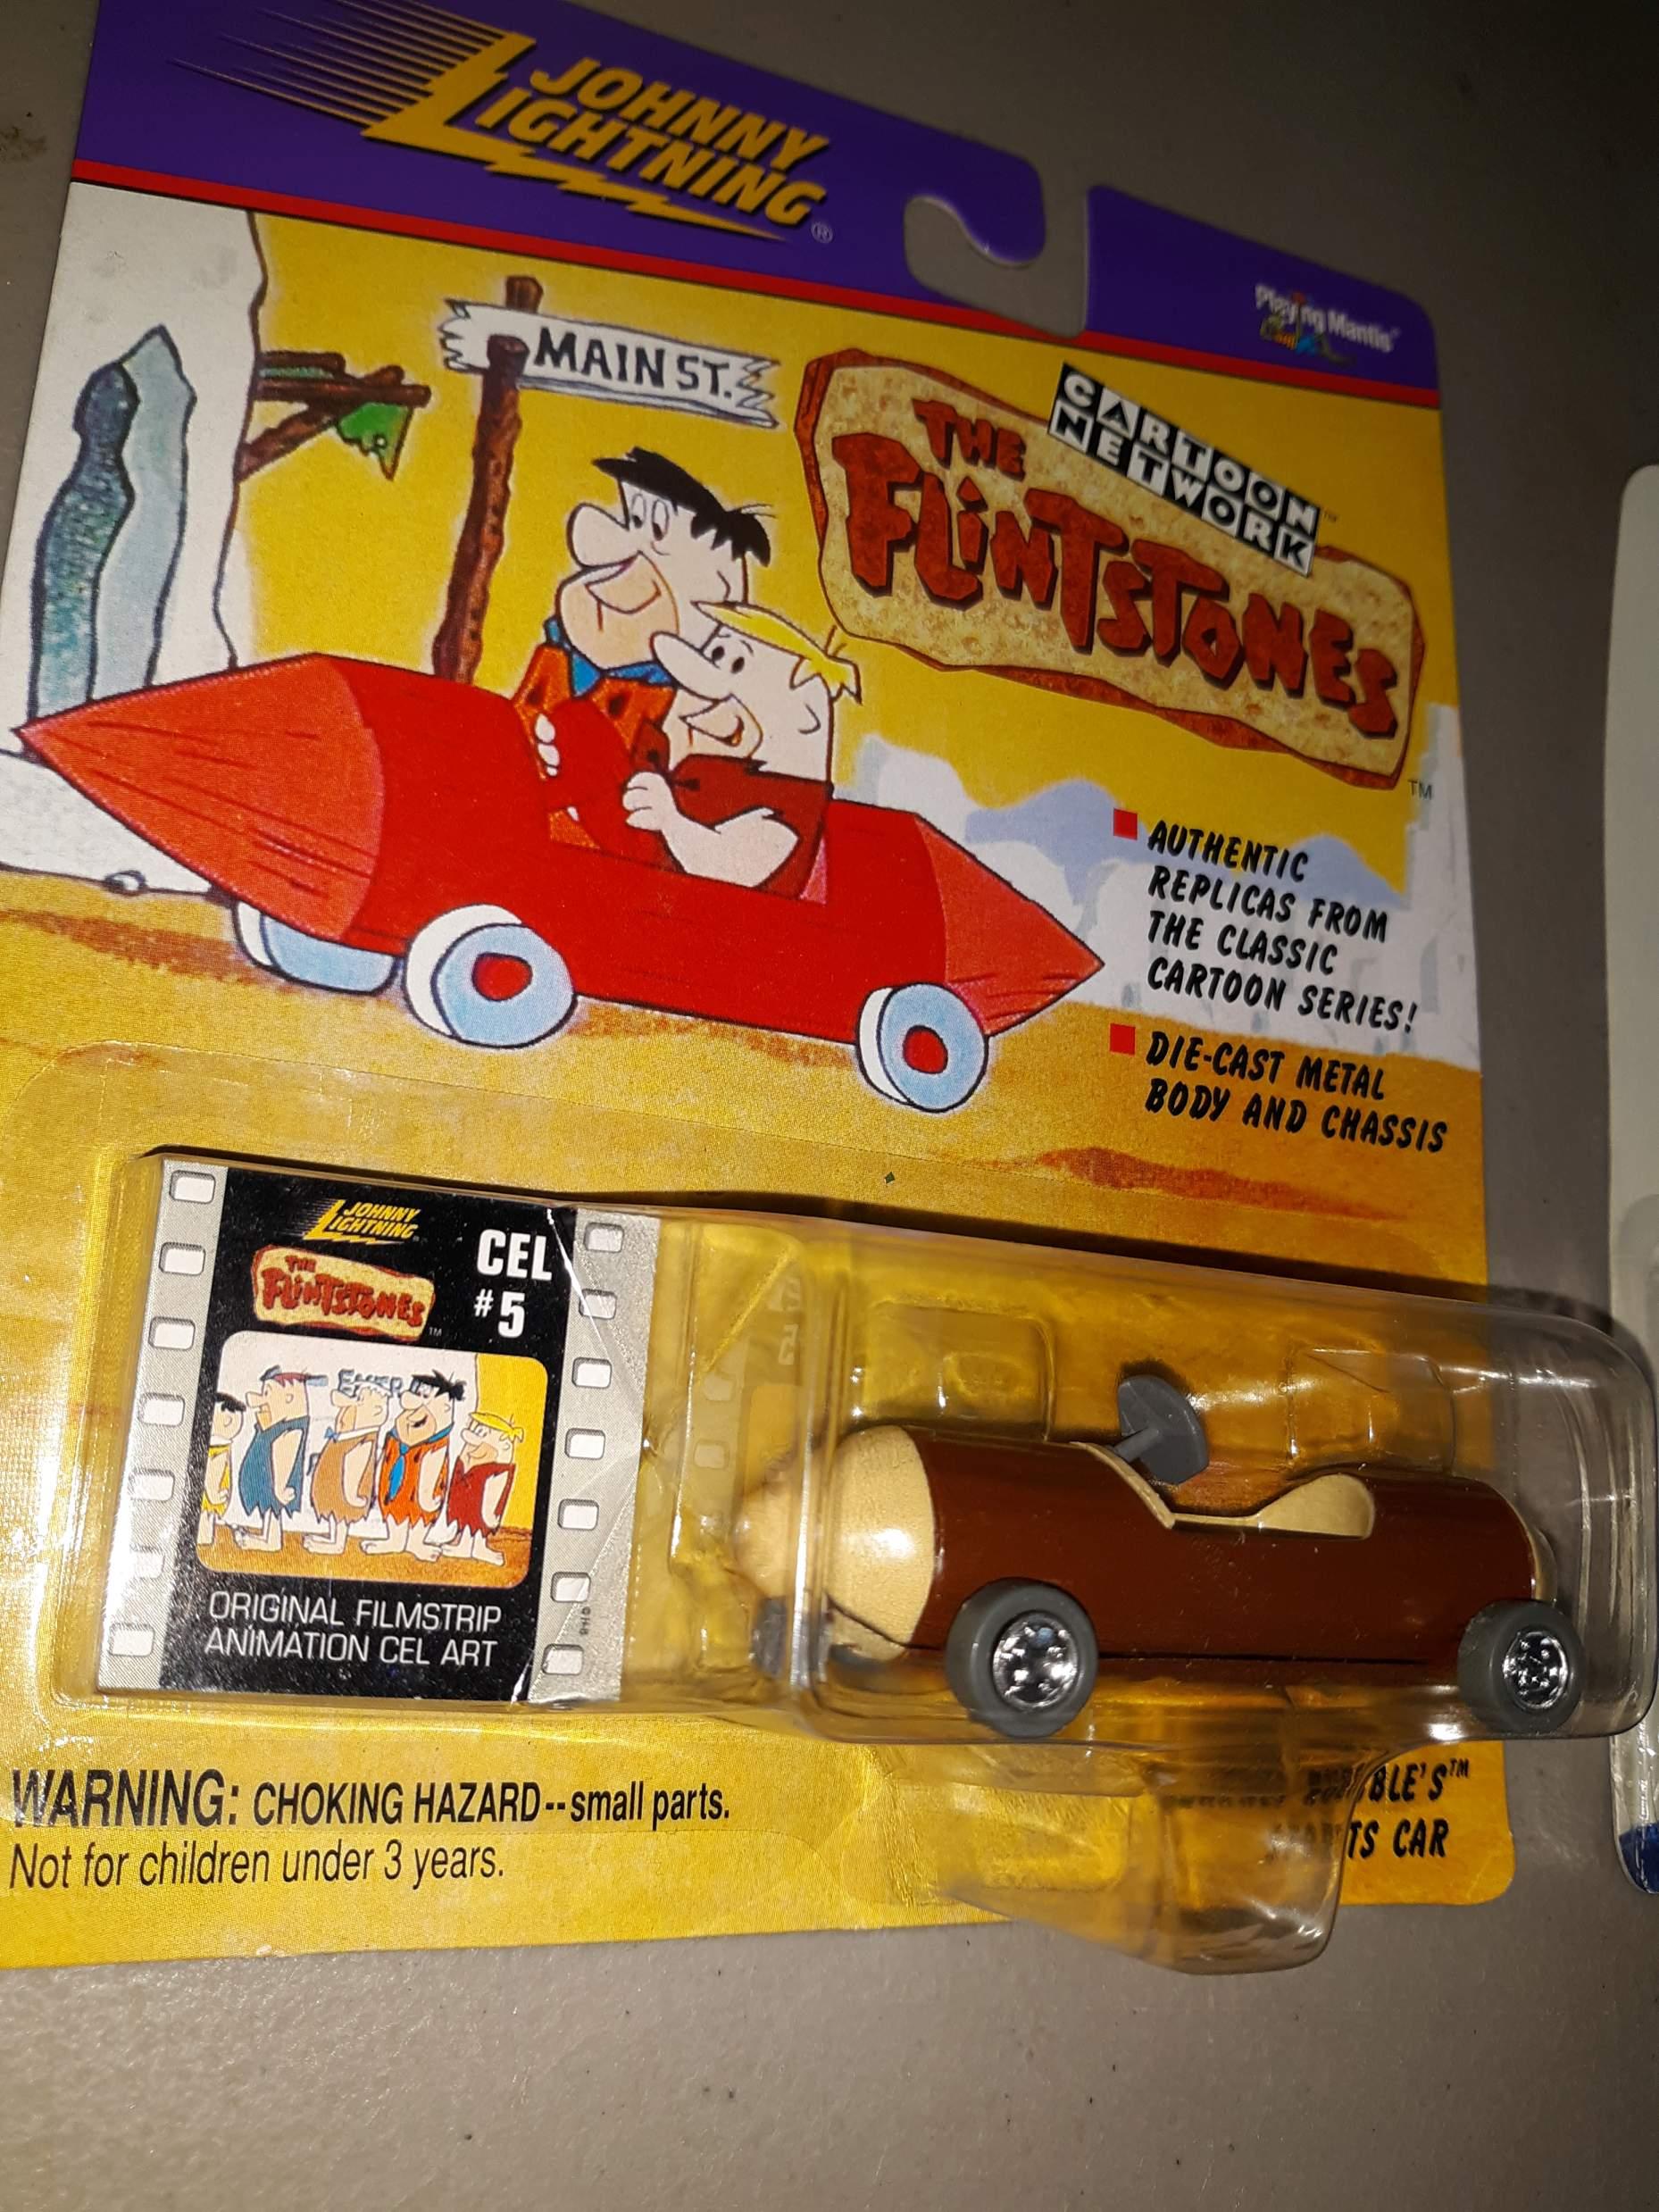 Johnny Lighting Flintstones, Toy Story 3 Hot Wheels, unopened